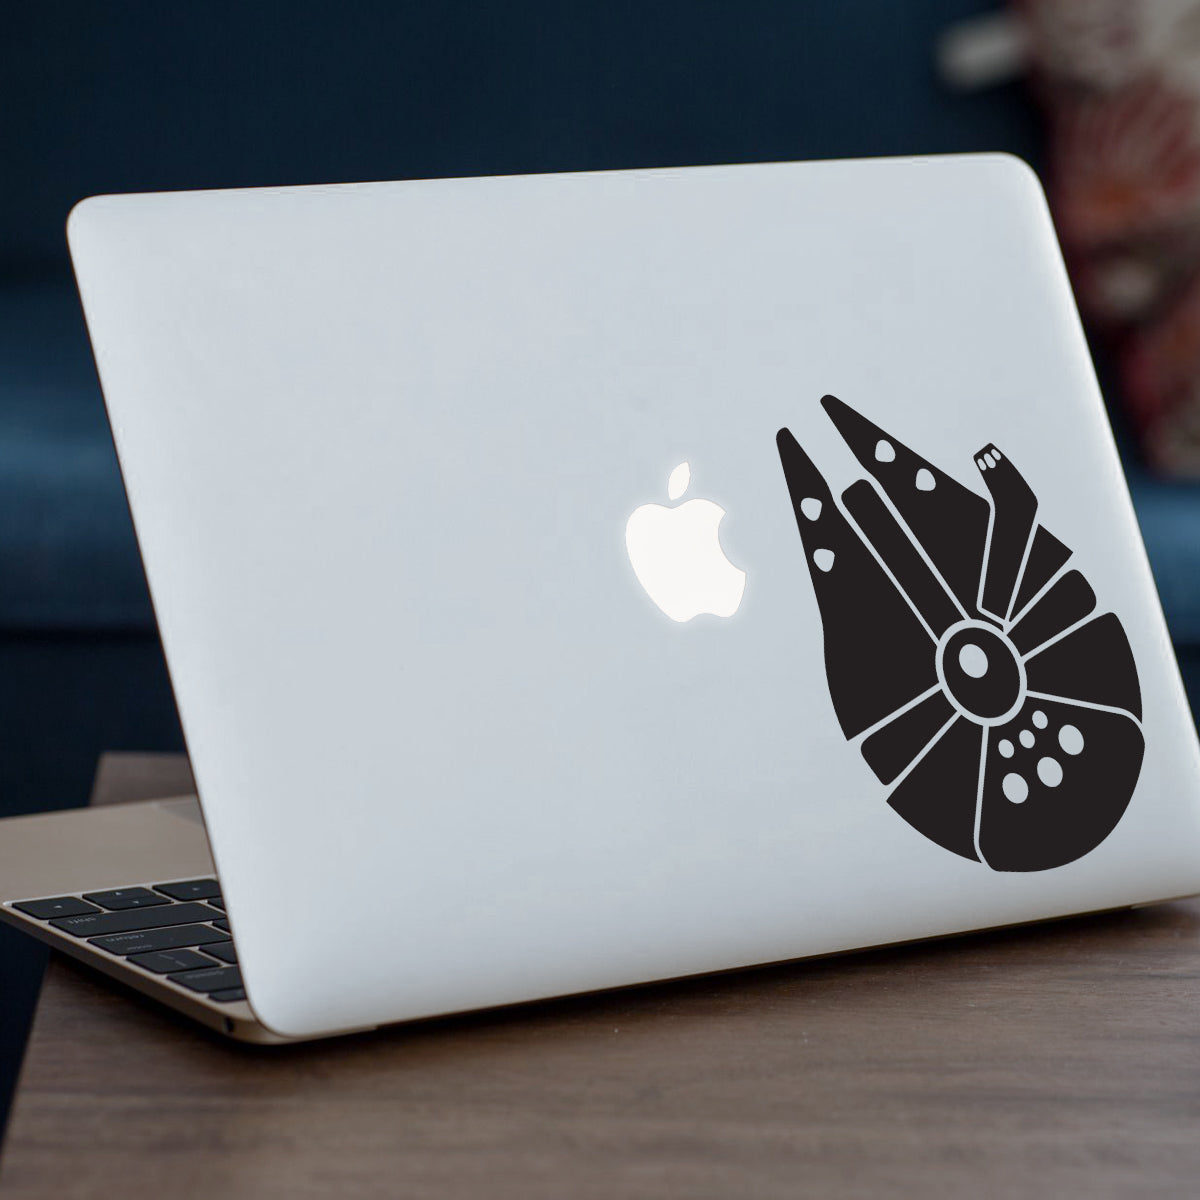 Star Wars Millennium Falcon Macbook Decal (Type 2)